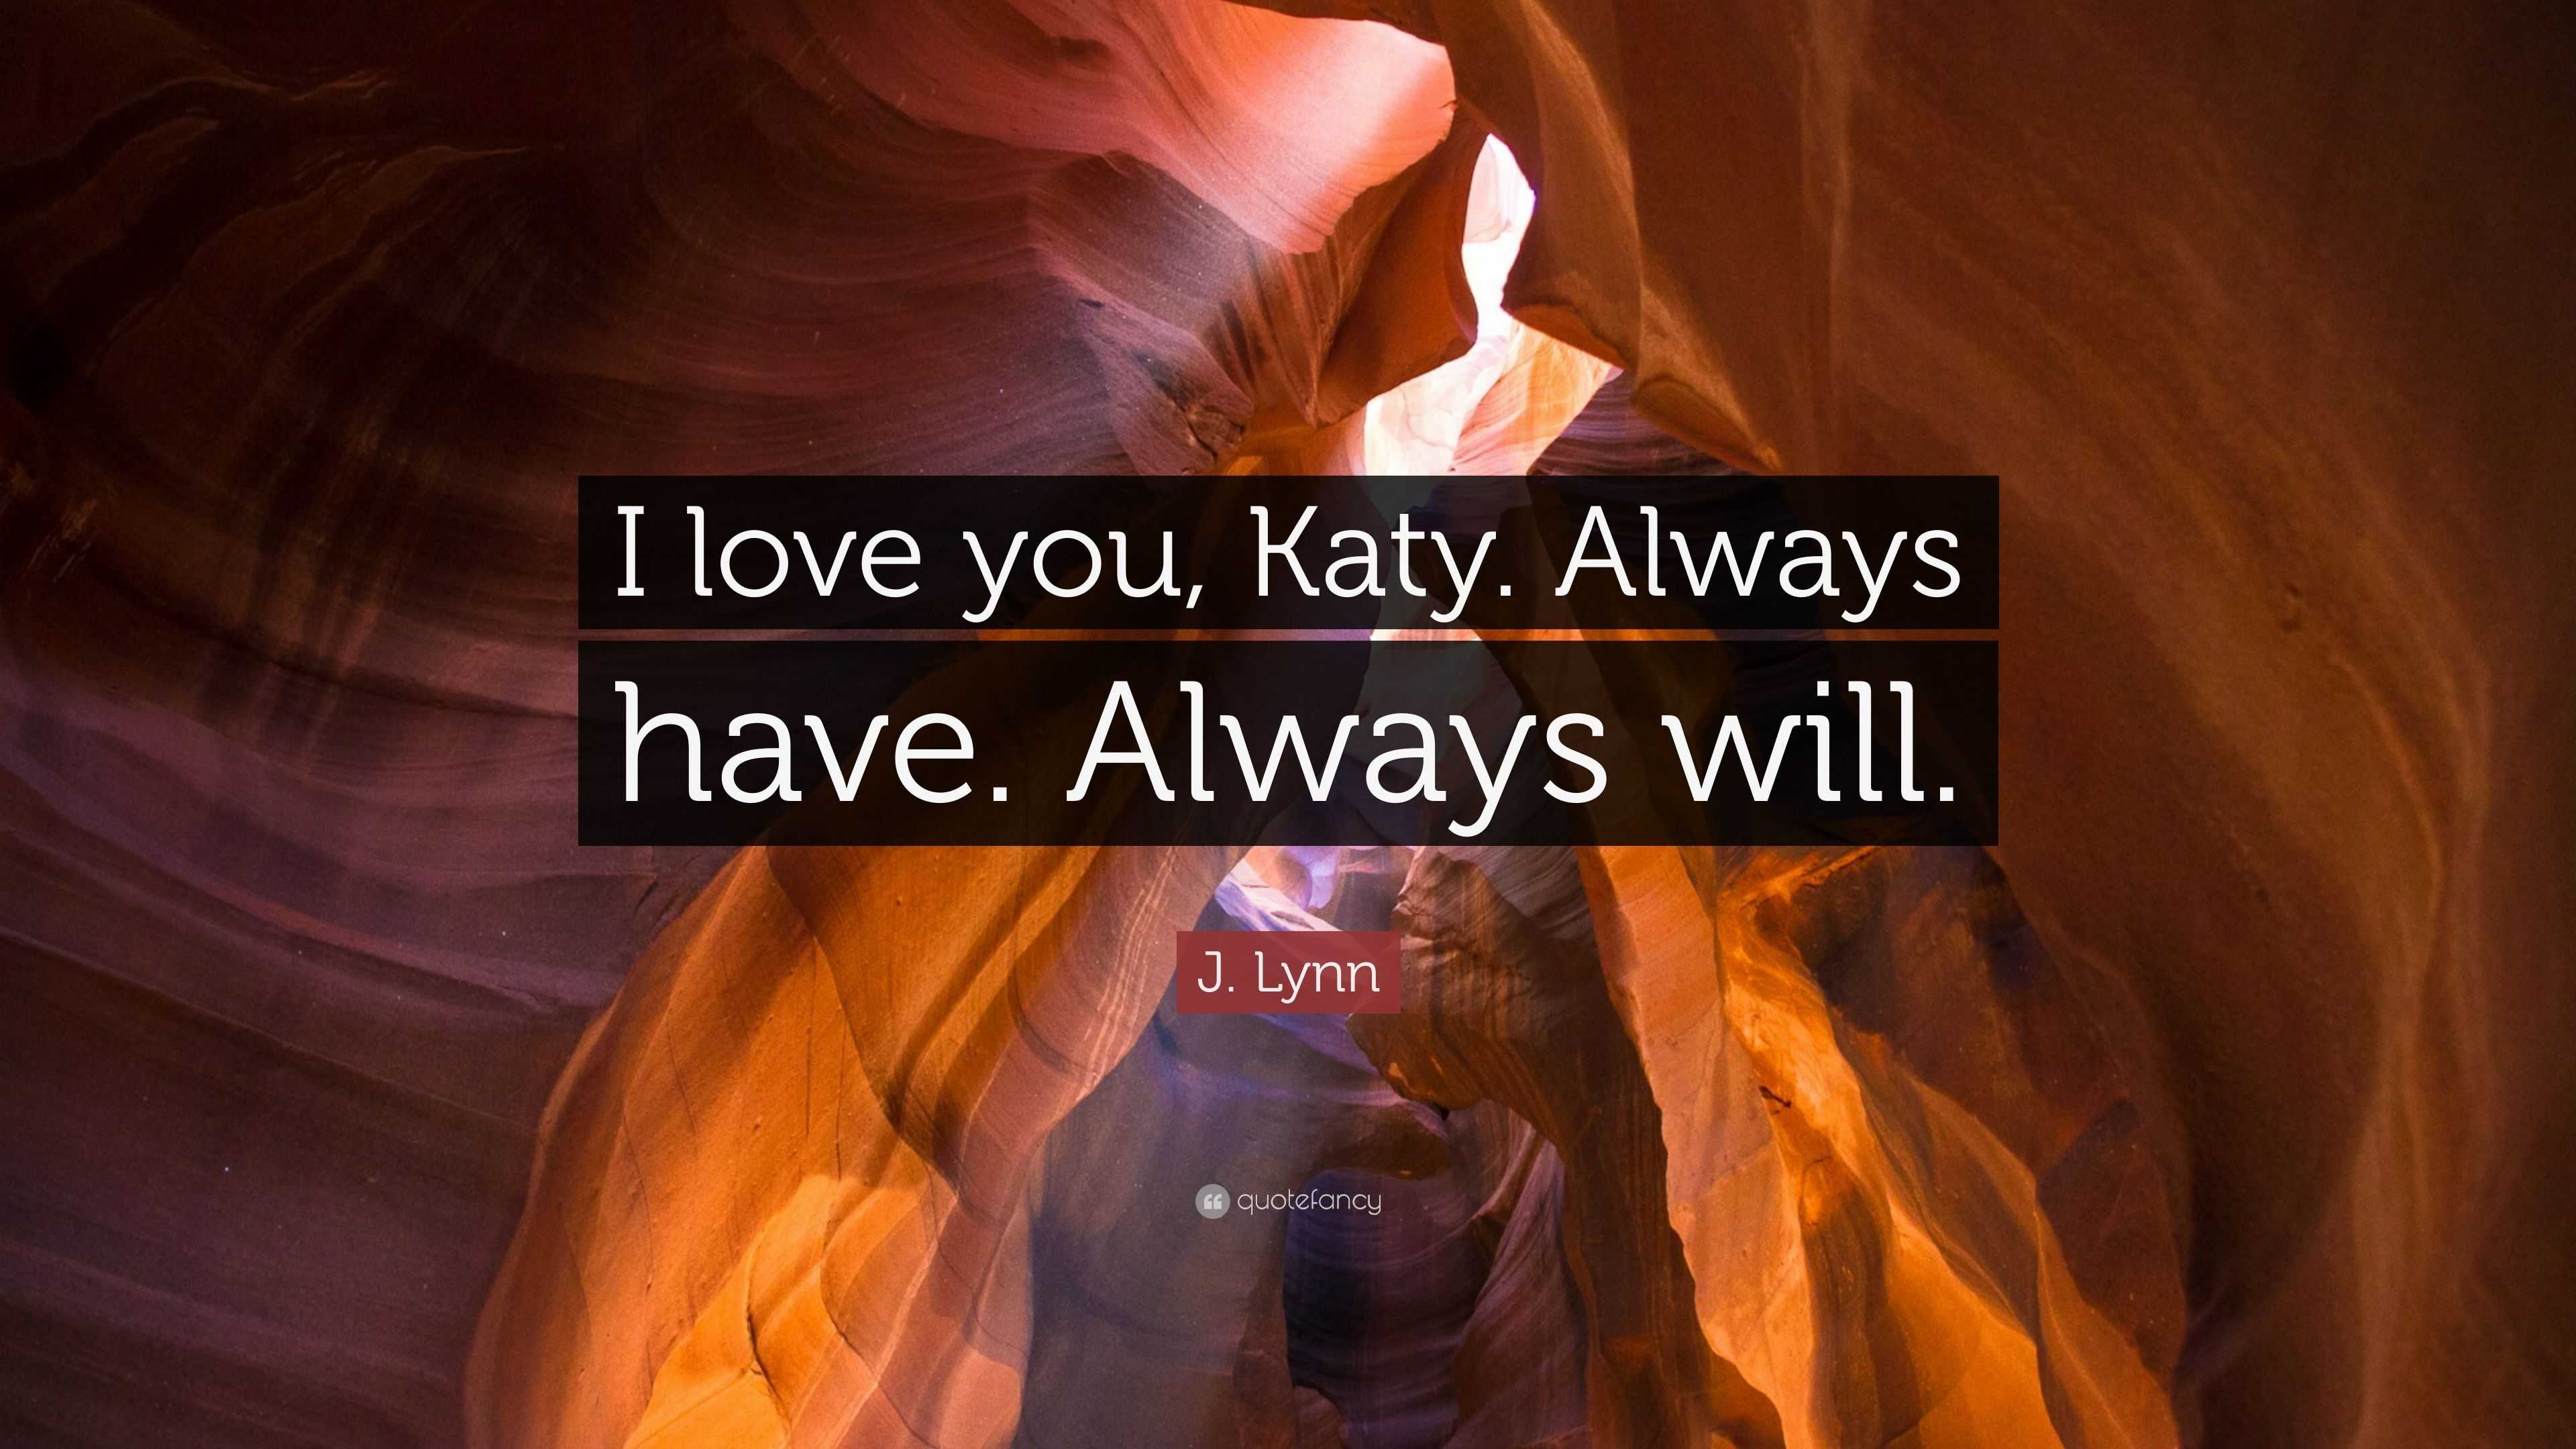 J Lynn Quote “I love you Katy Always have Always